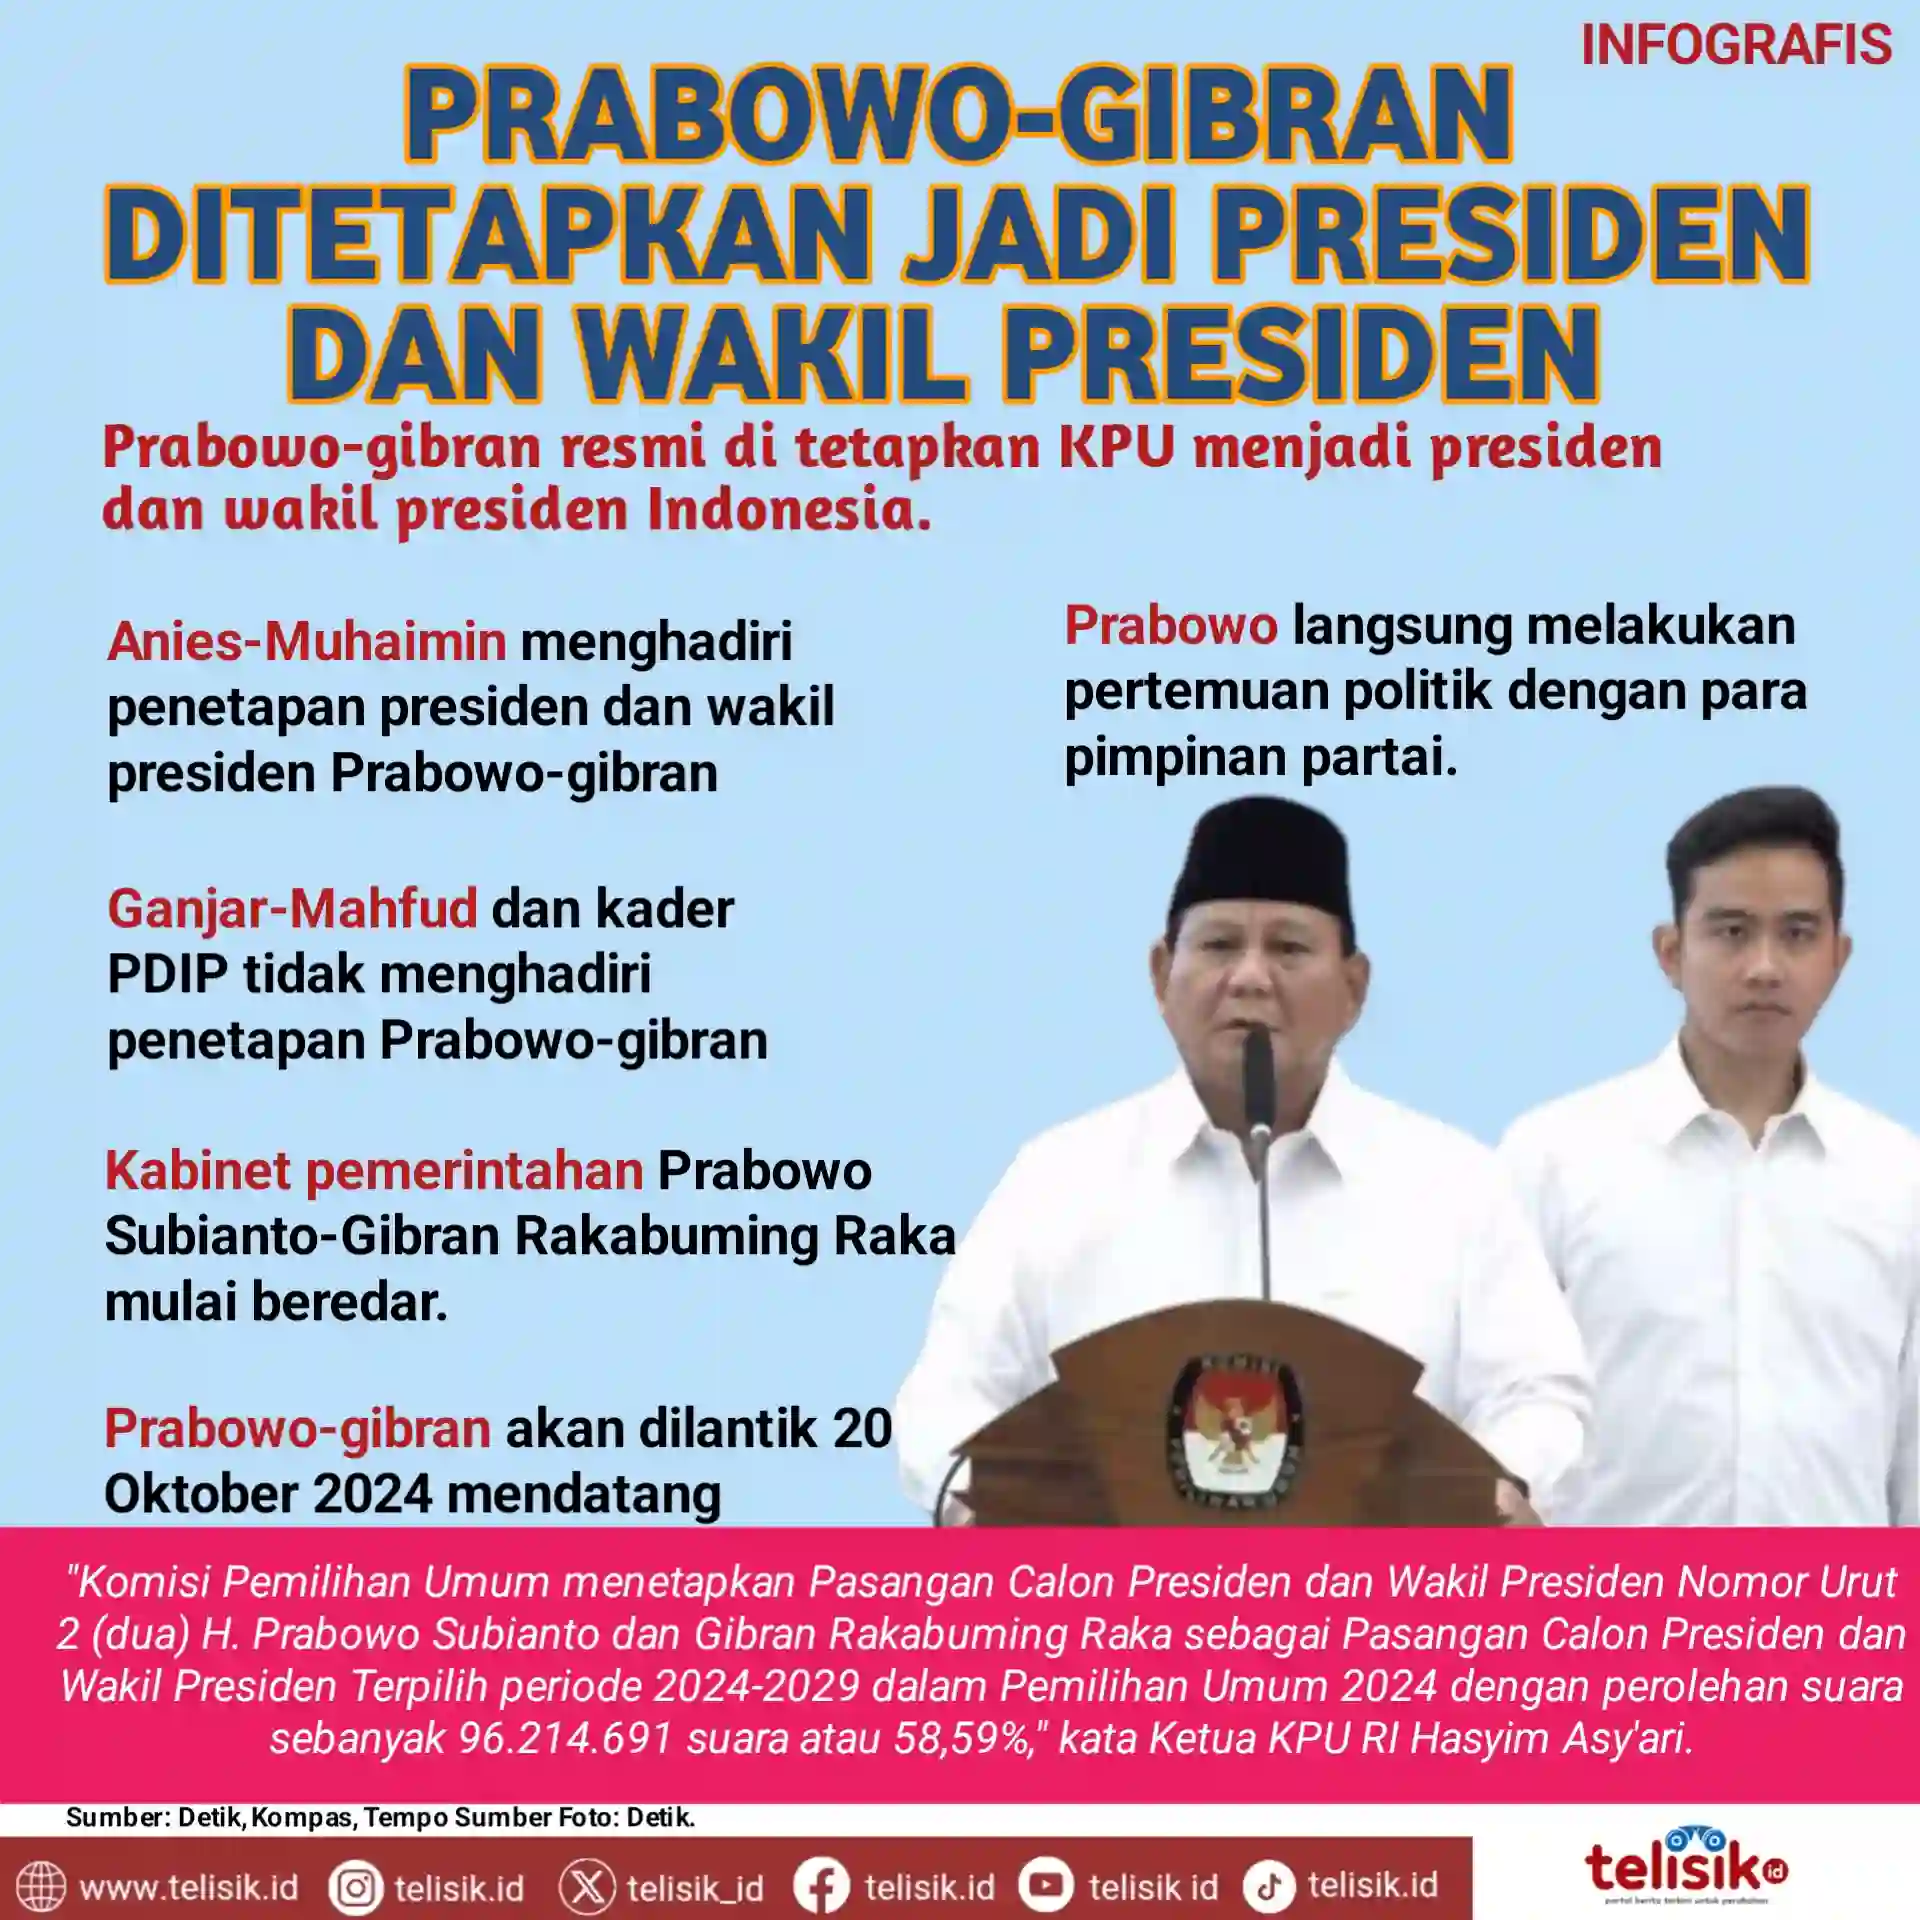 Infografis: Prabowo-Gibran Ditetapkan jadi Presiden dan Wakil Presiden 